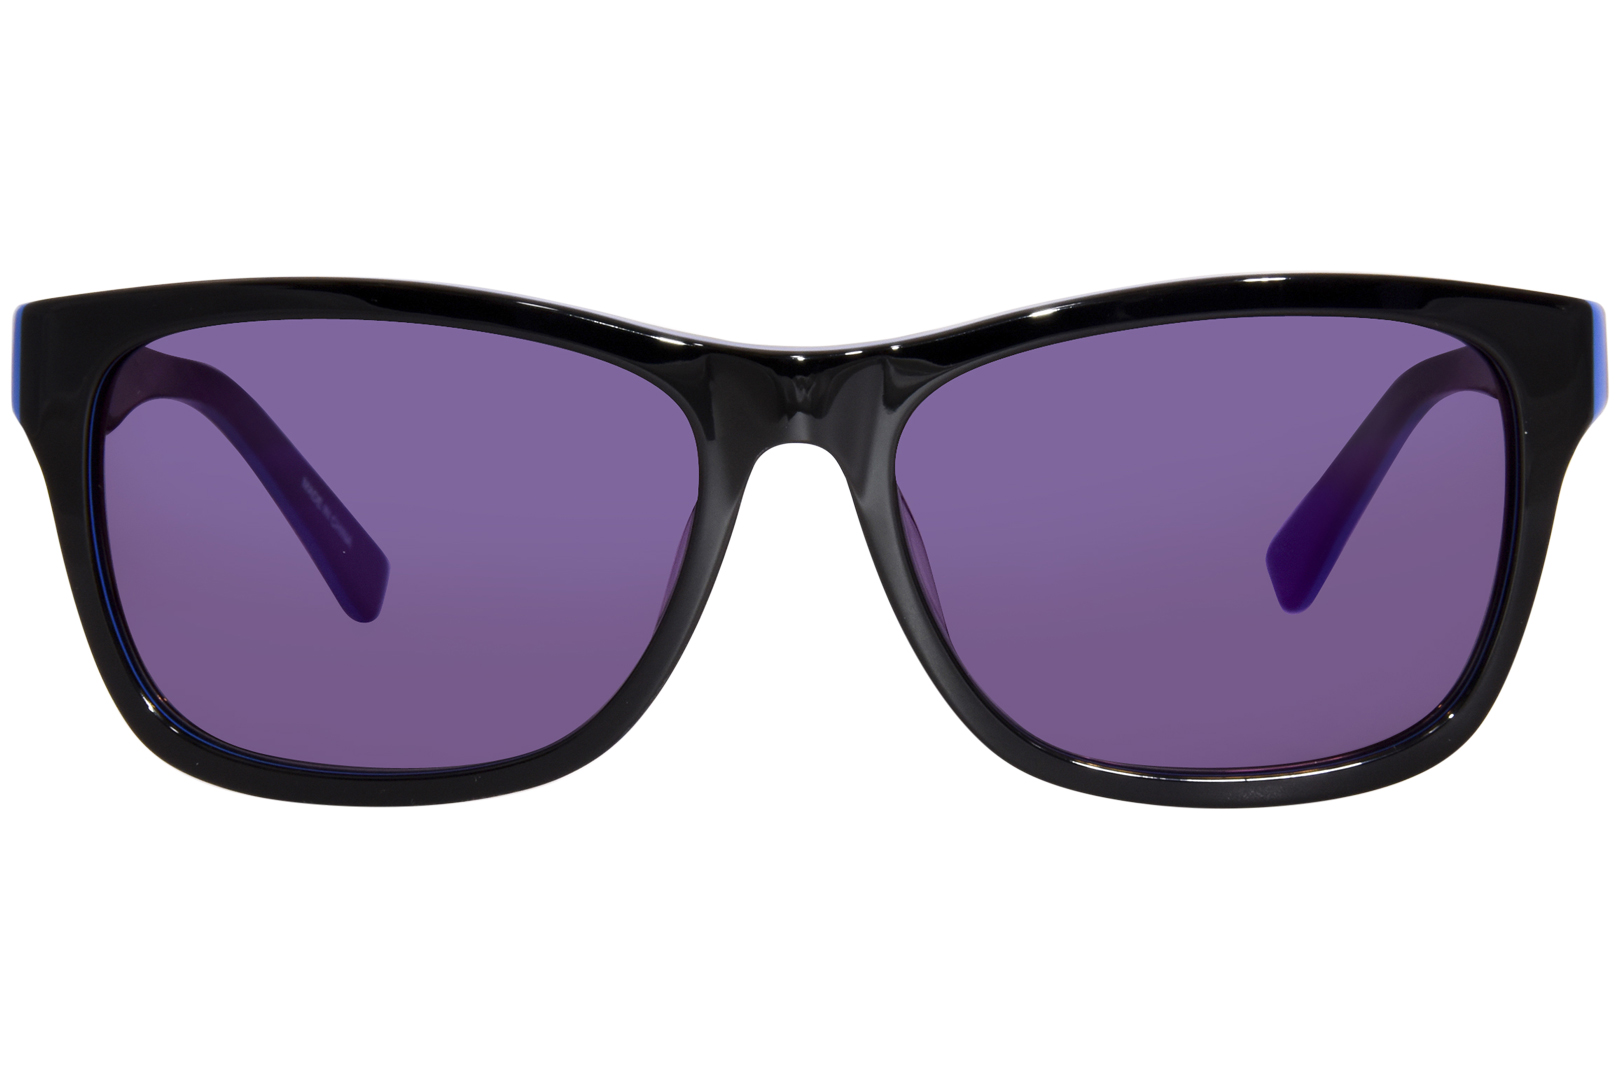 L683S 006 Sunglasses Men's Black/Blue/Grey Shape 55-16-140 | EyeSpecs.com